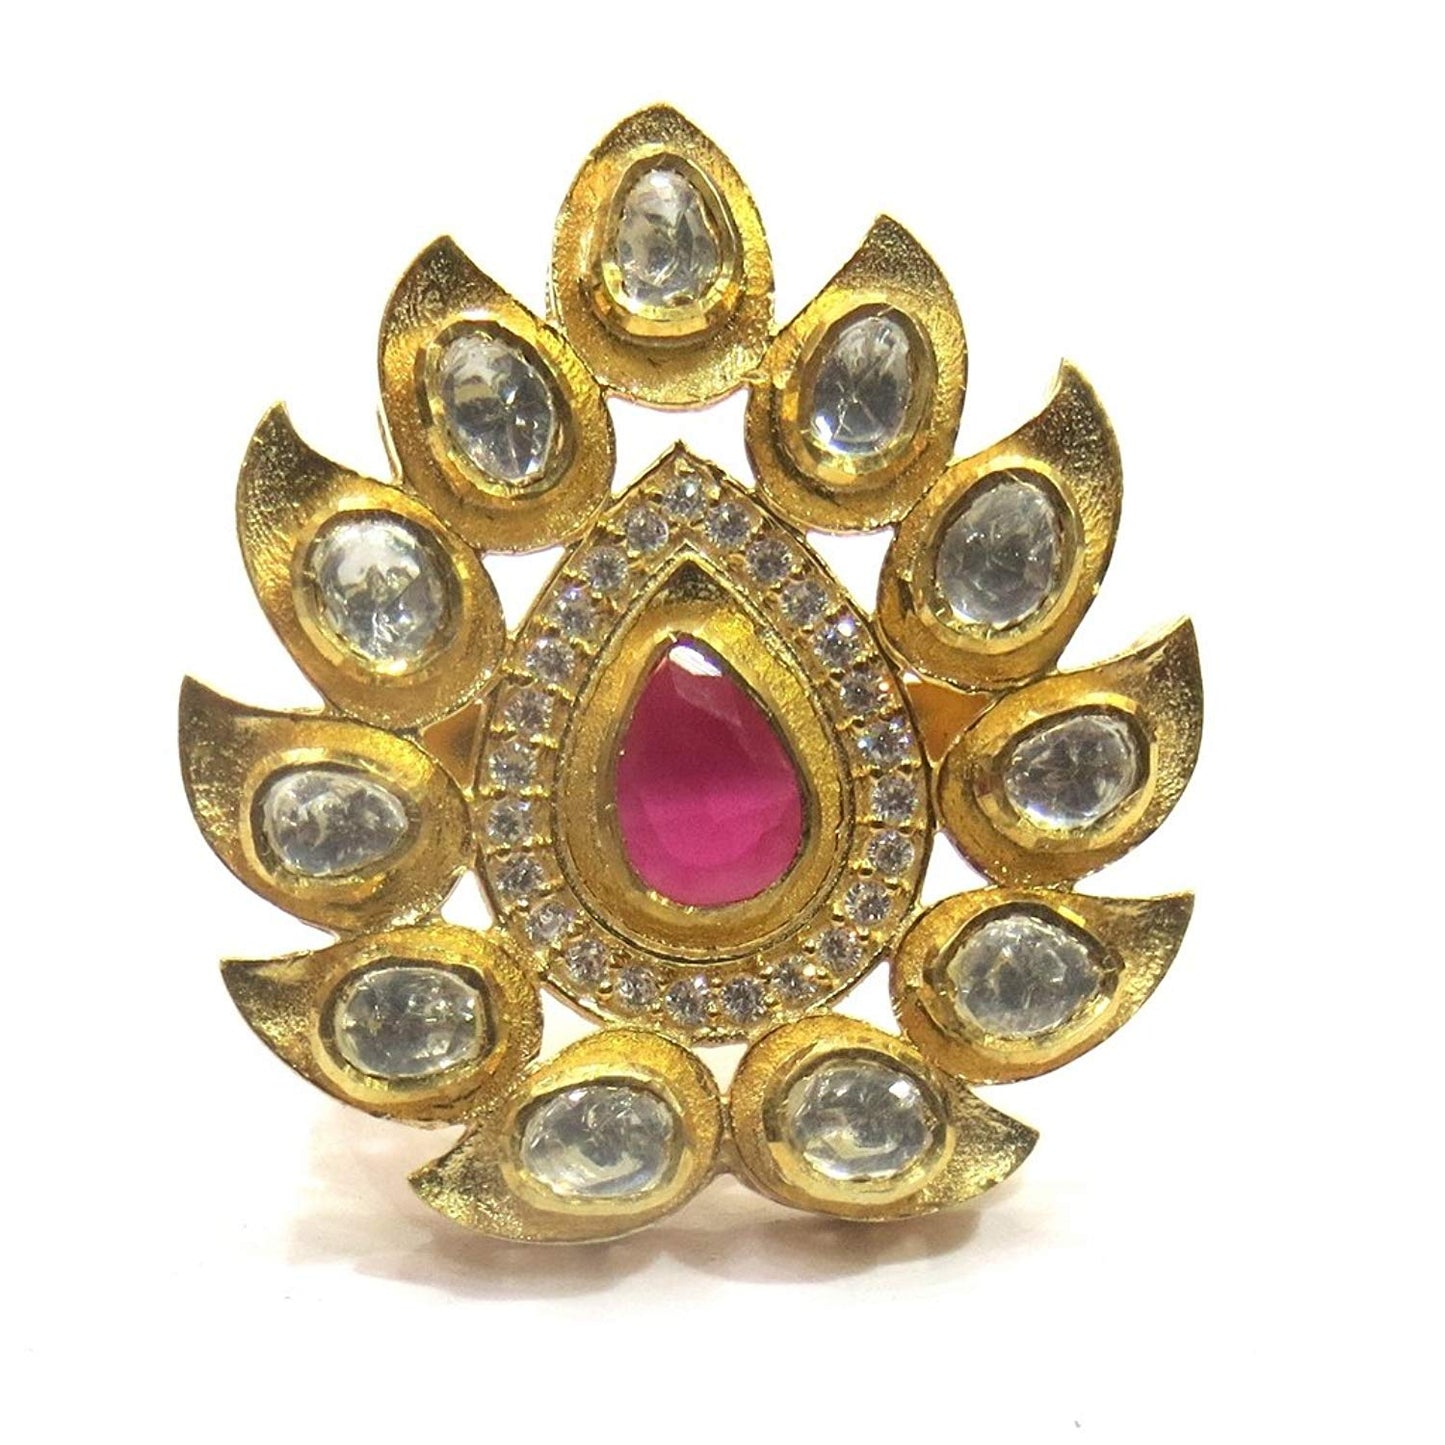 Jewelshingar Jewelry Fine 92.5 % Sterling Silver Ring For Women ( 38010-ssr-ruby )